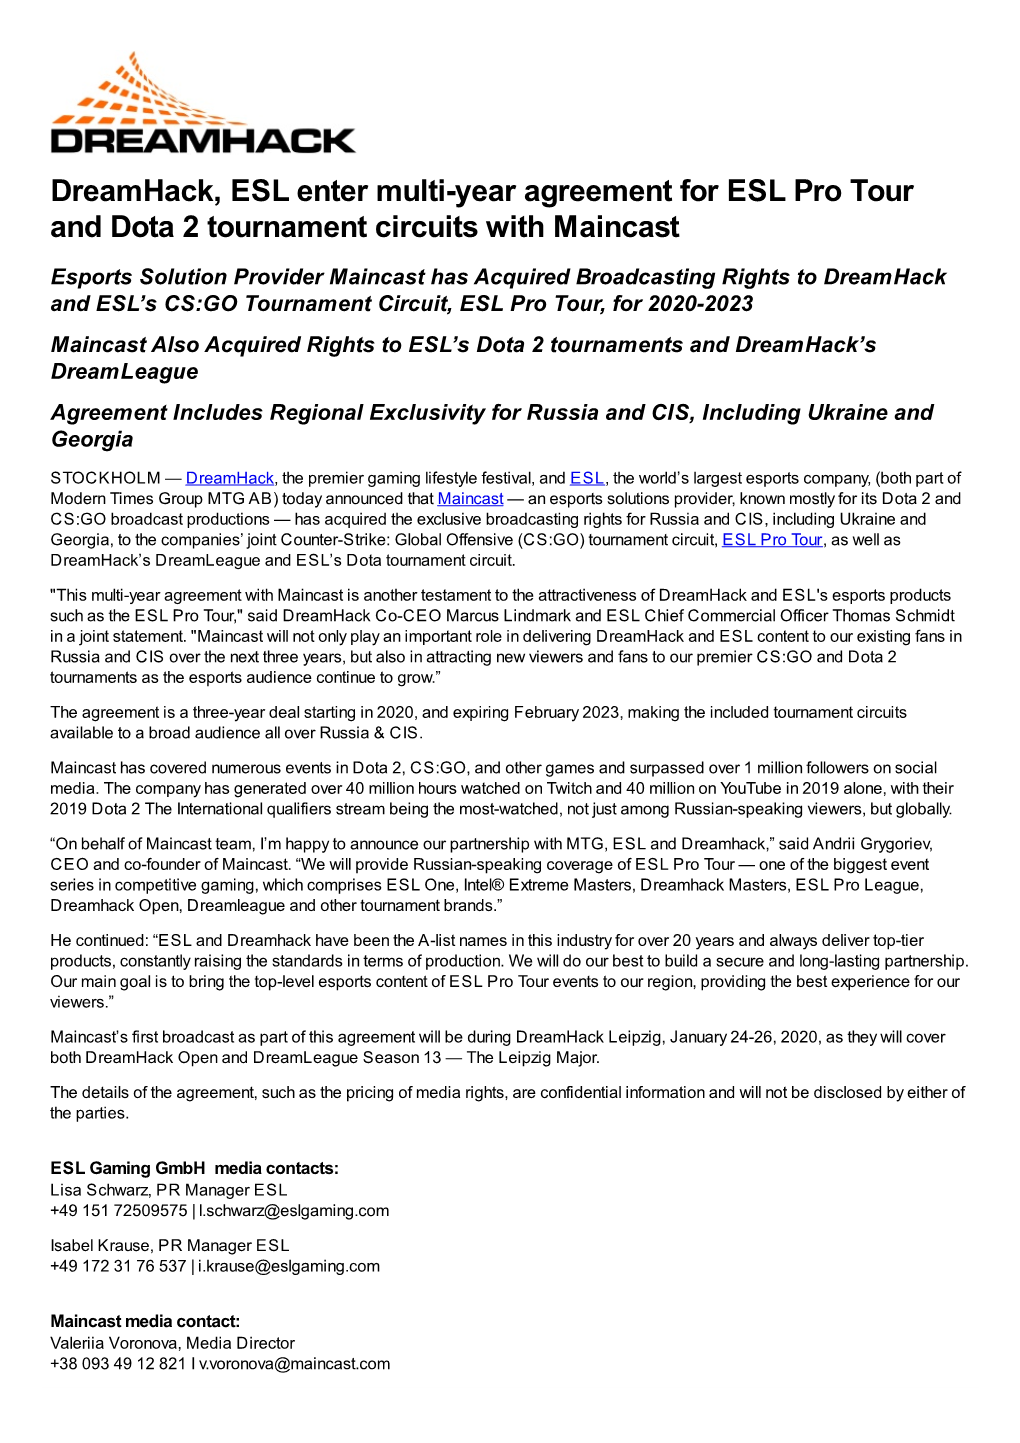 Dreamhack, ESL Enter Multi-Year Agreement for ESL Pro Tour And